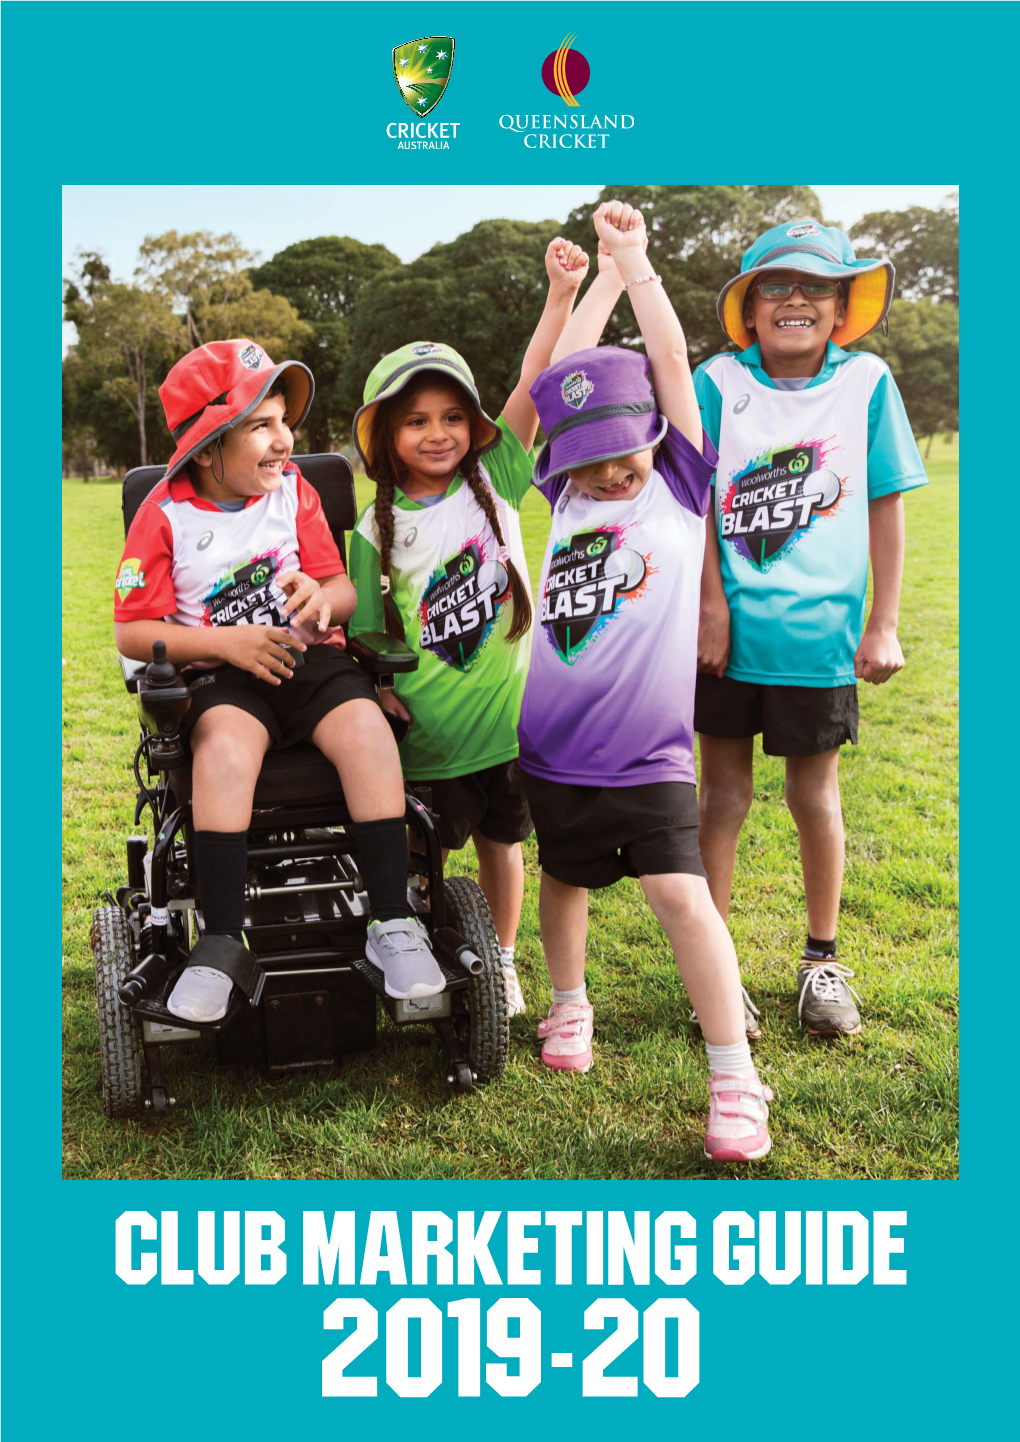 Club Marketing Guide 2019-20 Hello